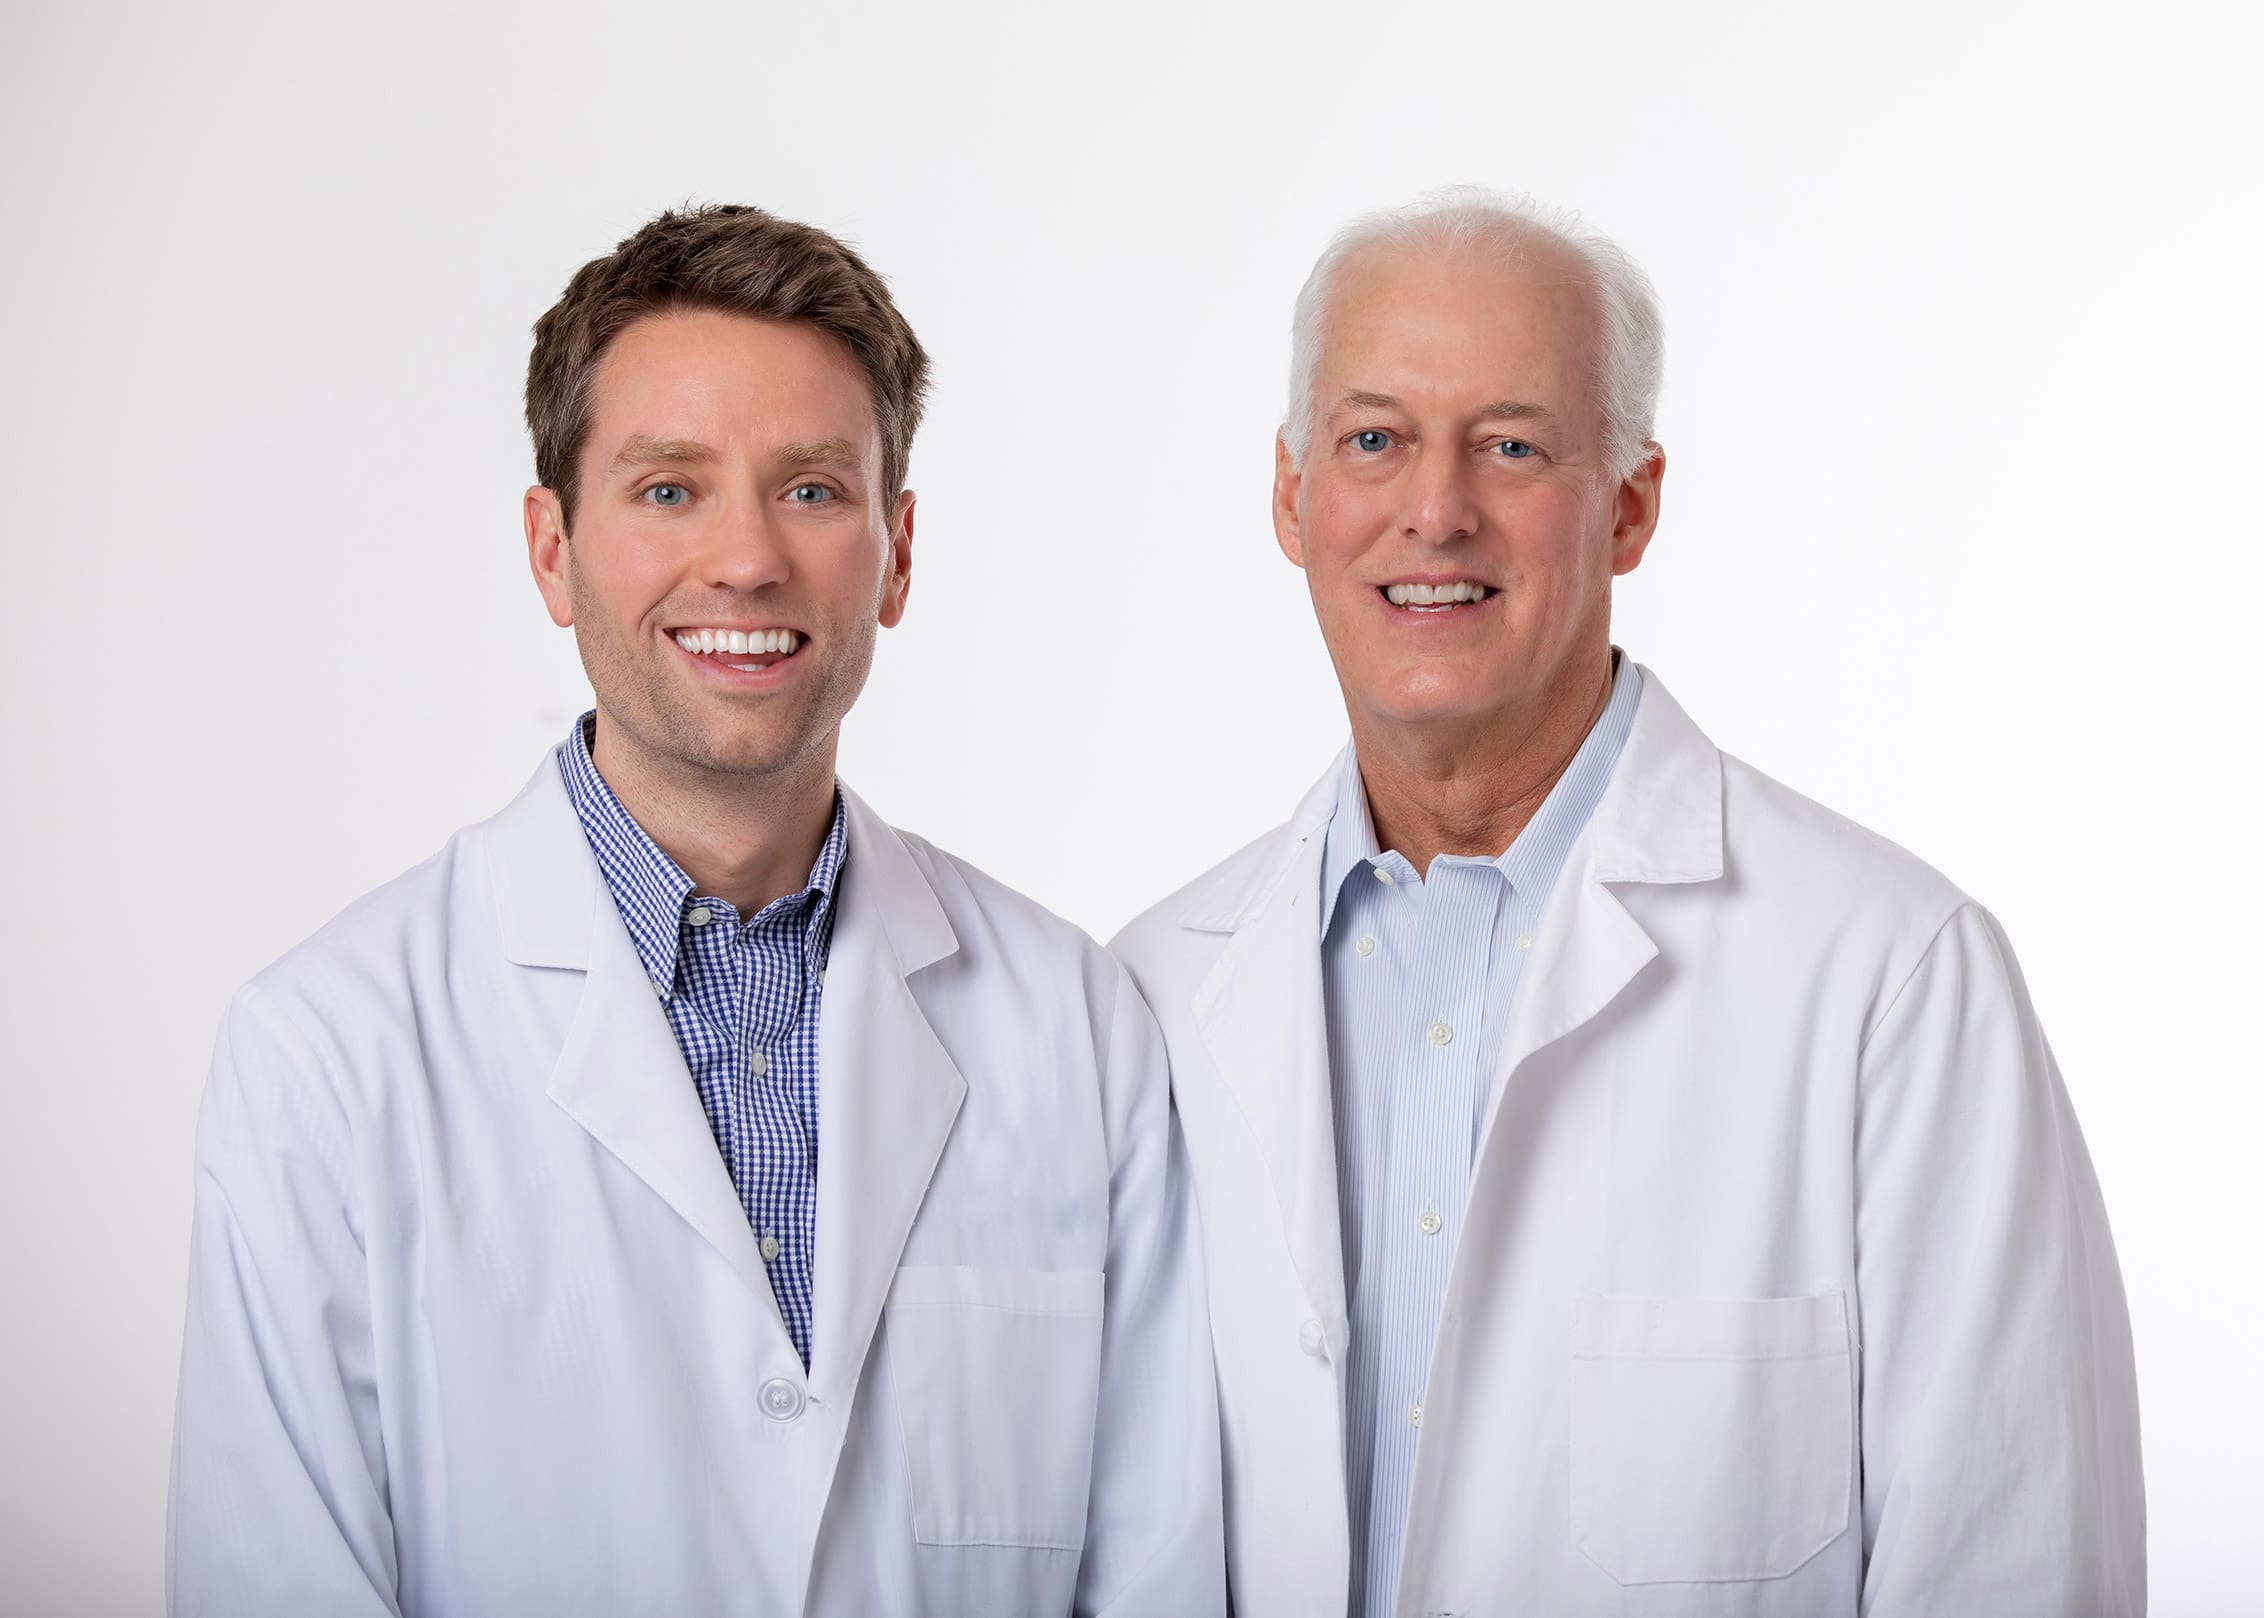 Both Doctors Smiling